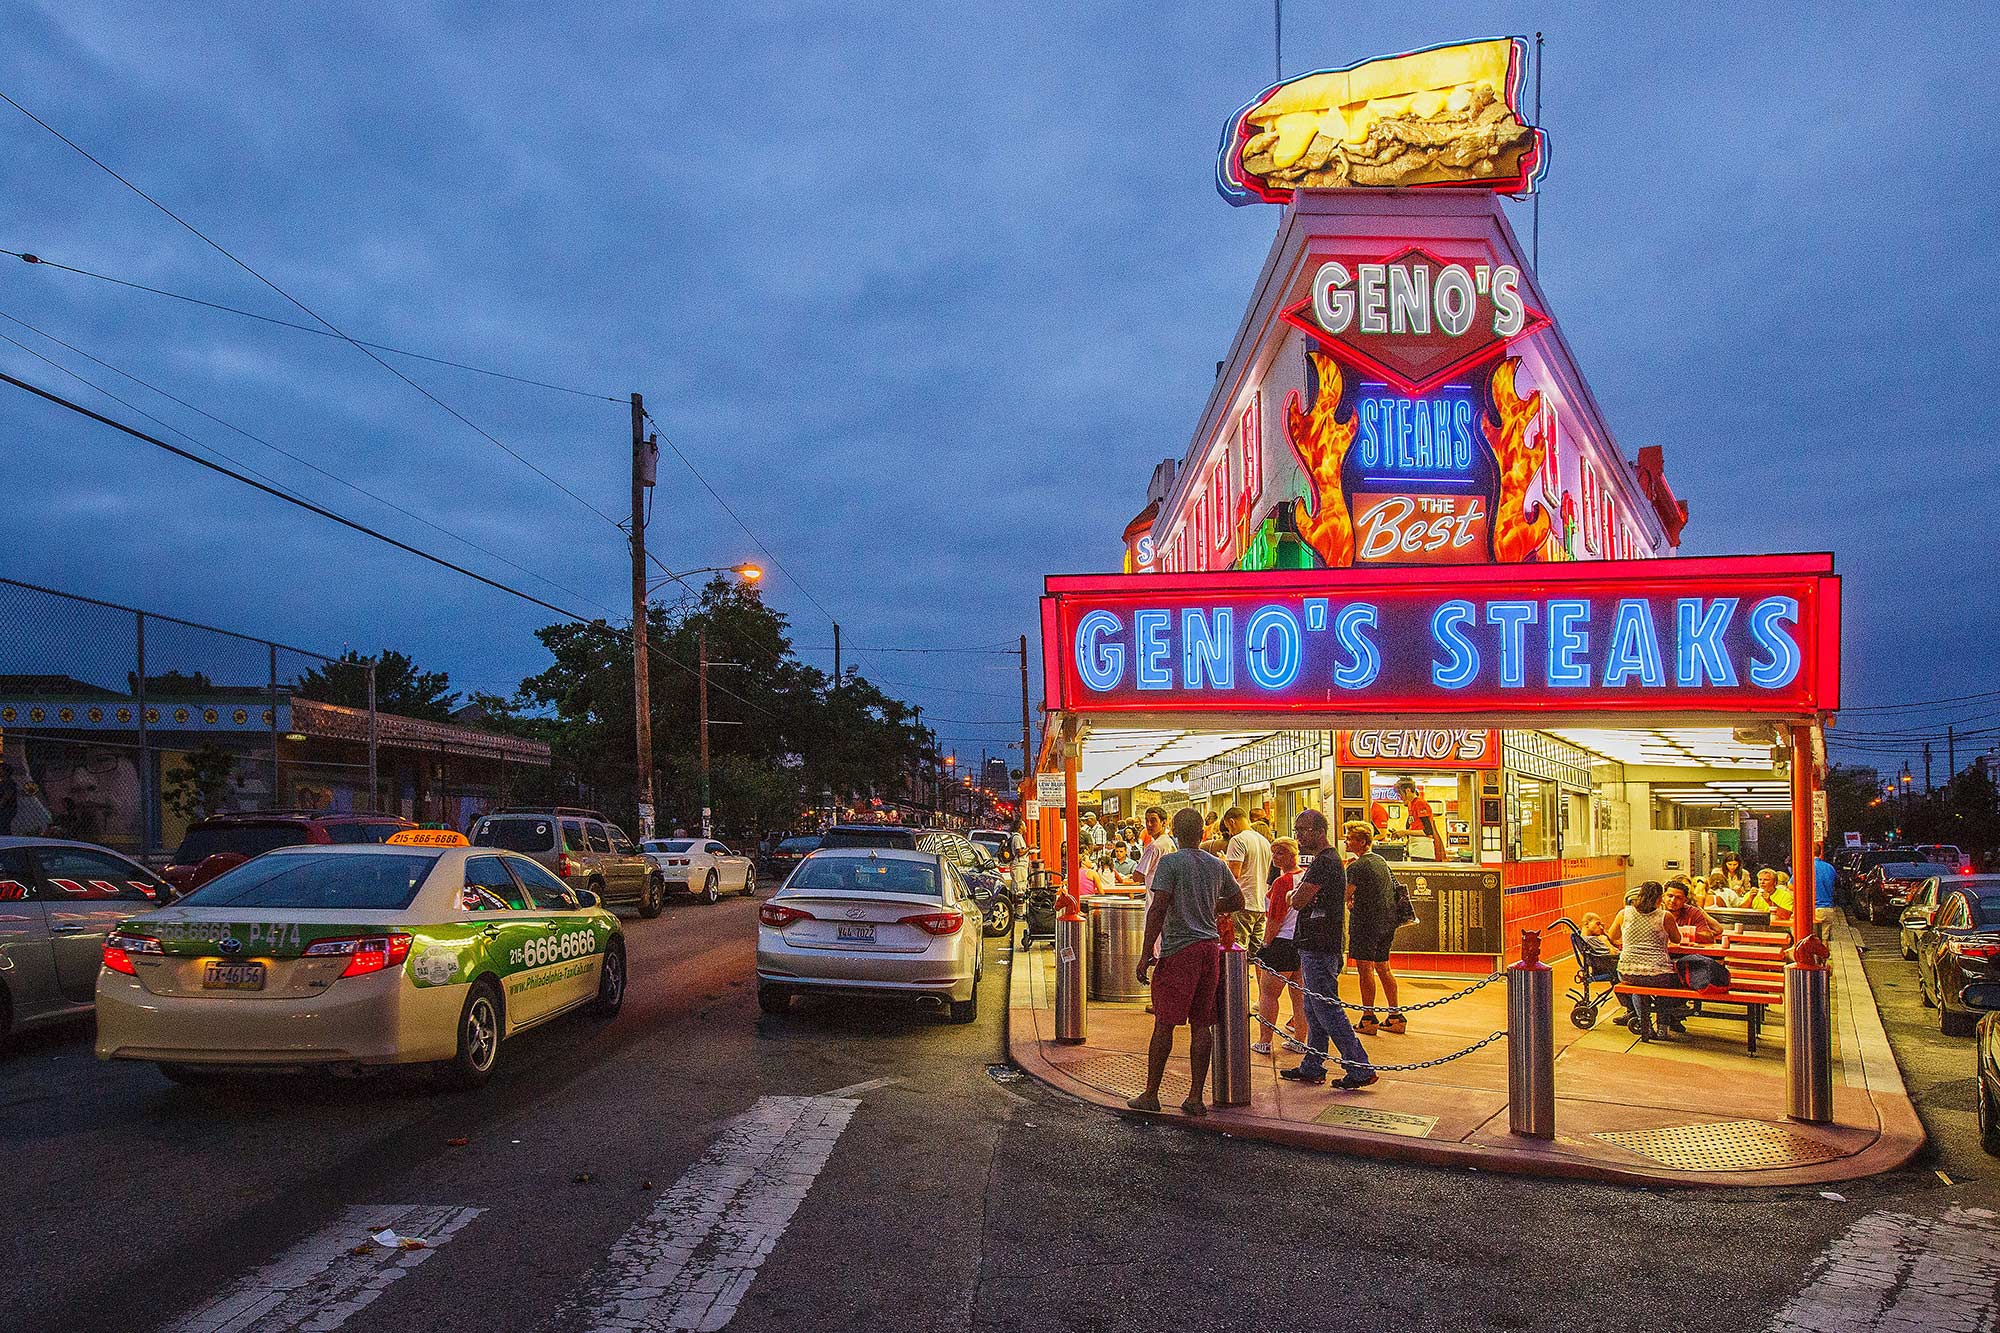 Geno's Steaks, Philadelphia, PA - 7/17/15